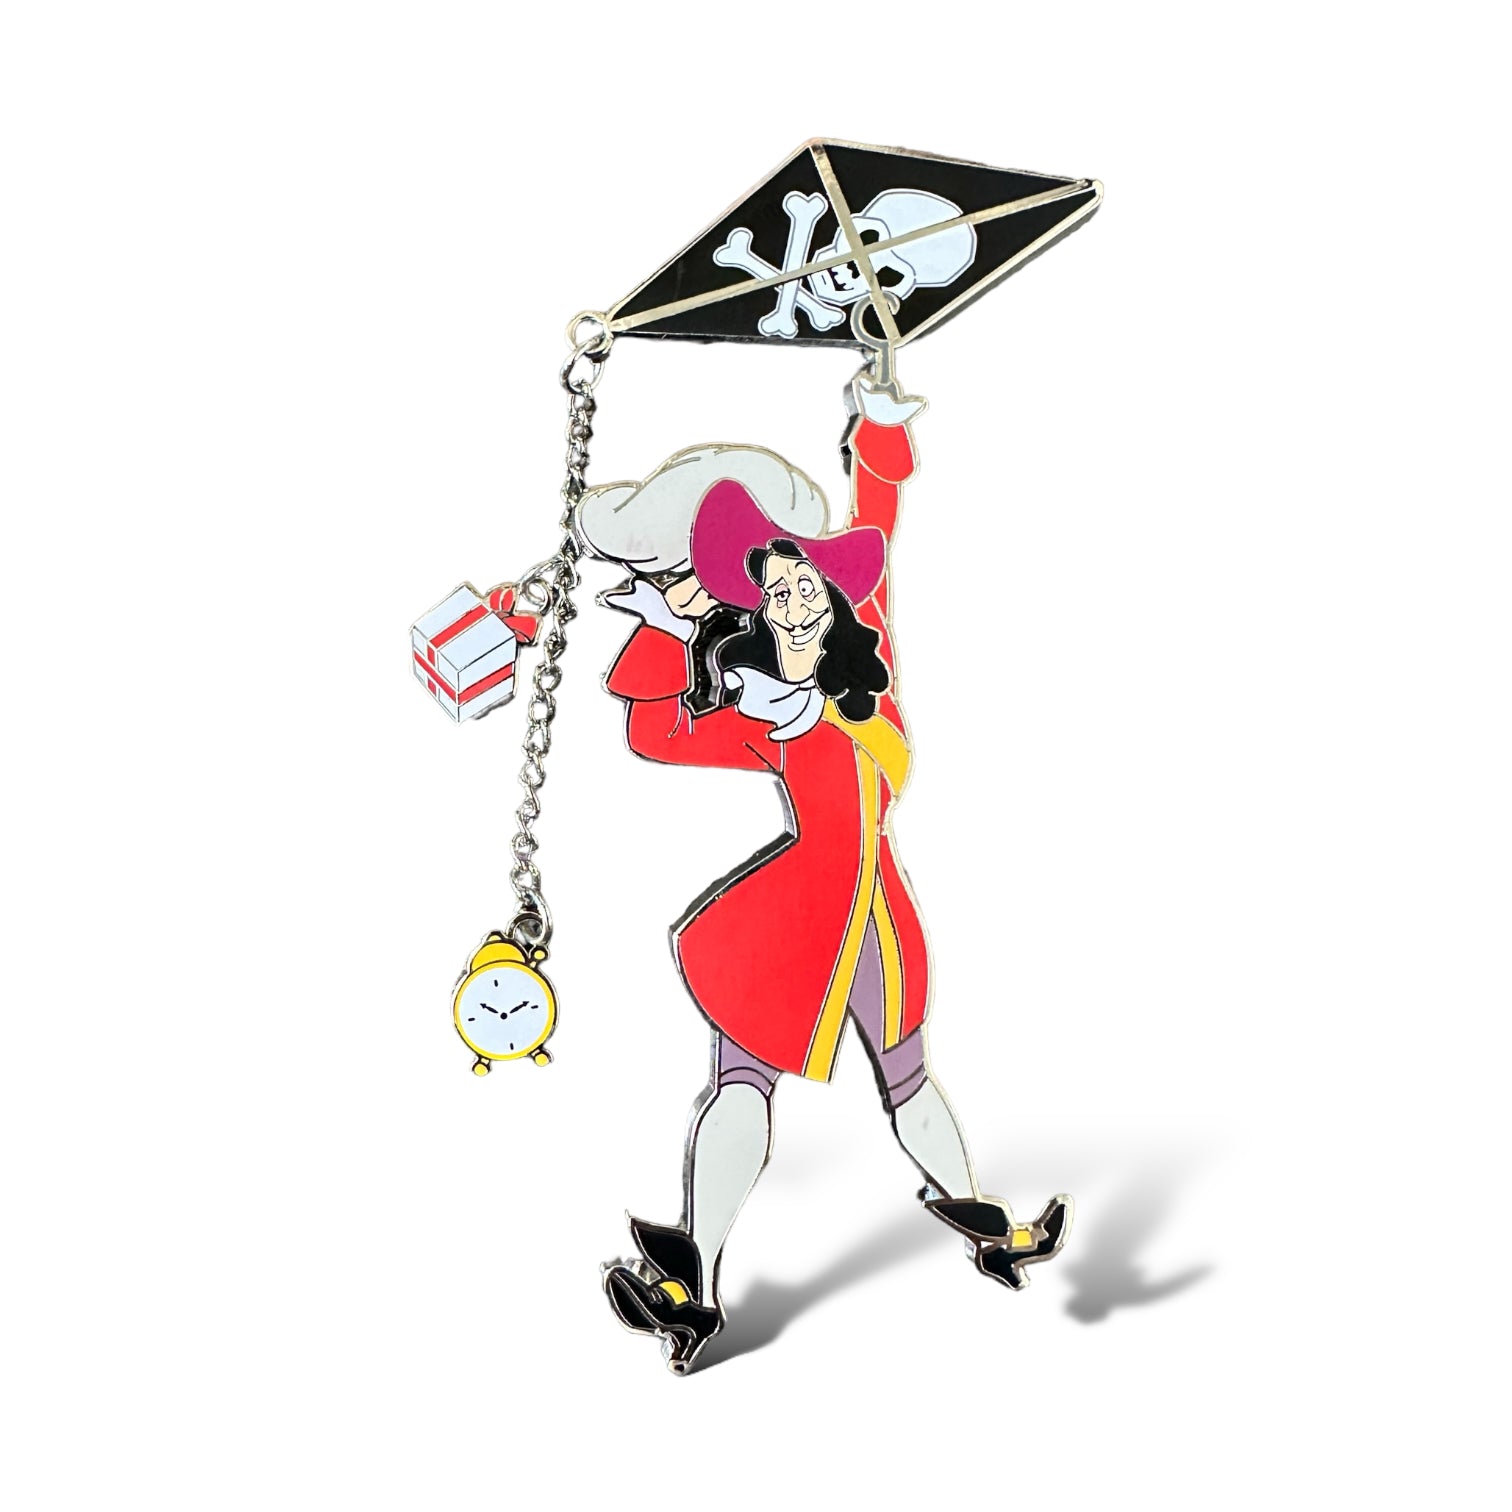 DLRP Kite Characters Captain Hook Pin